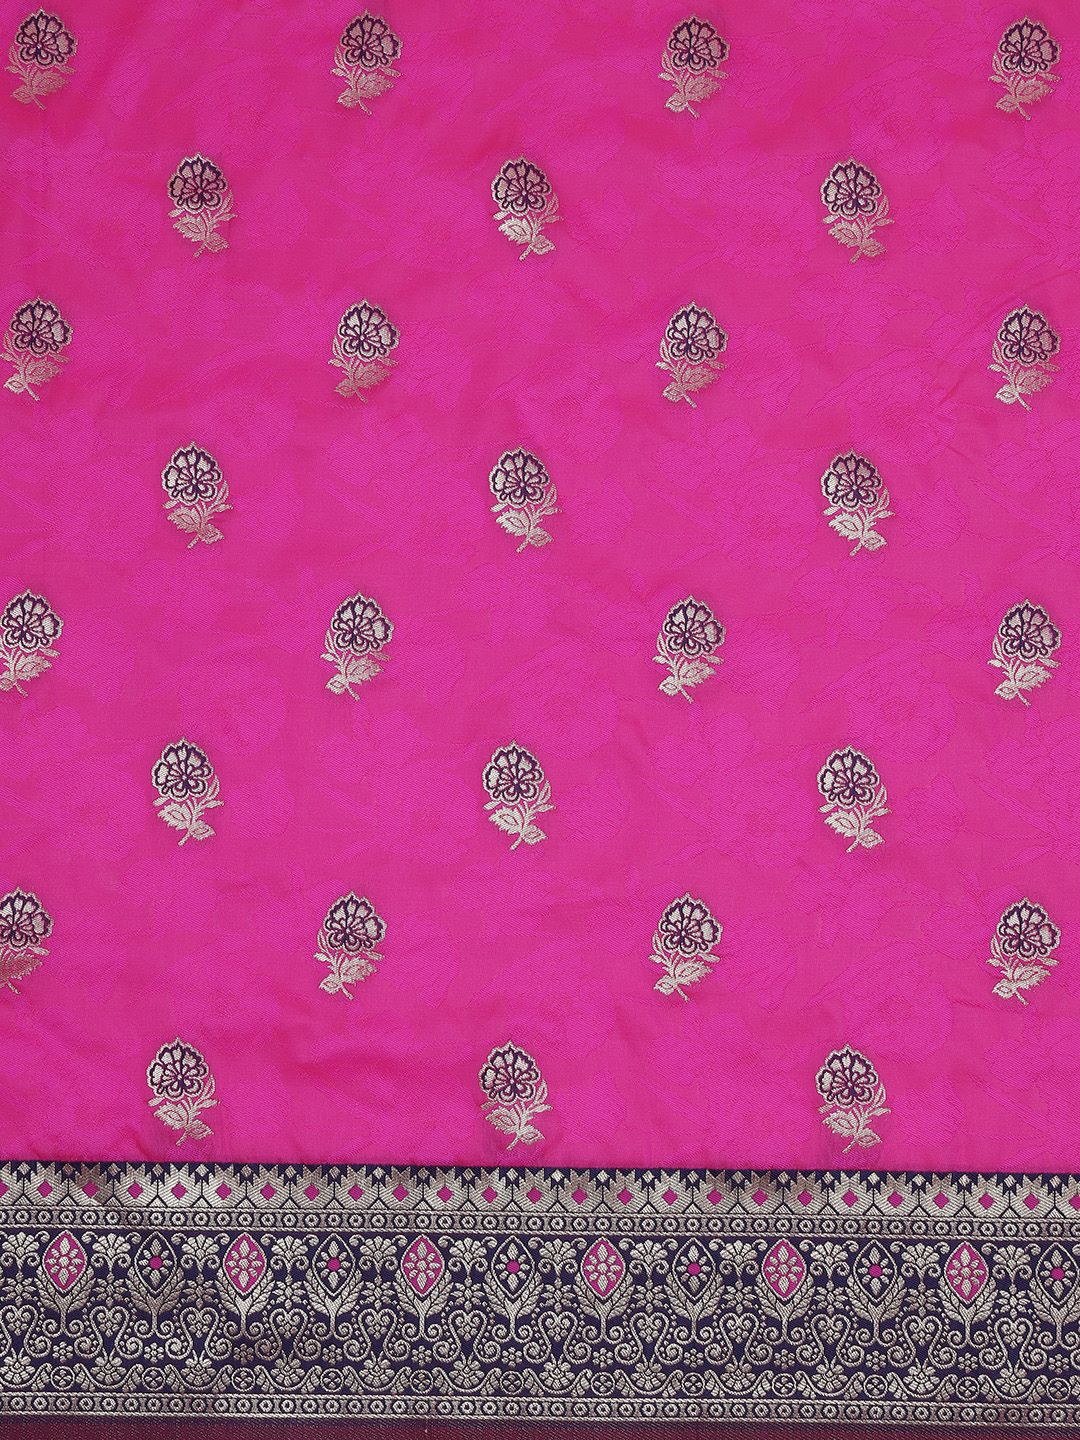 Pink Color Heavy Banarasi silk Emboss Saree Gorgeous all over Body Design